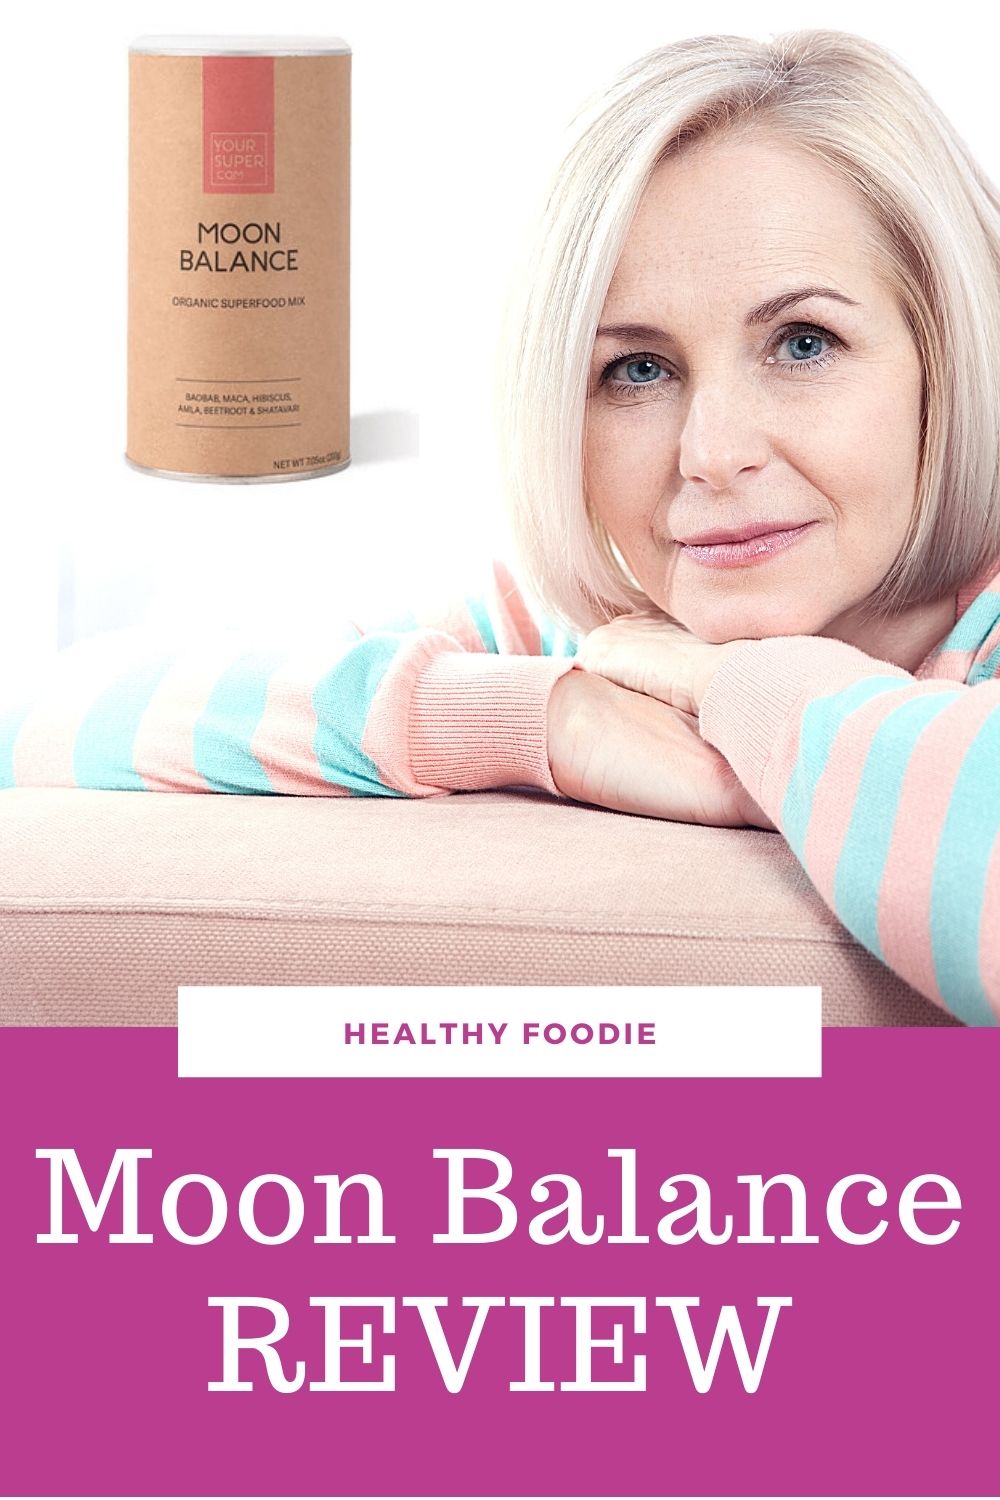 Moon Balance Review